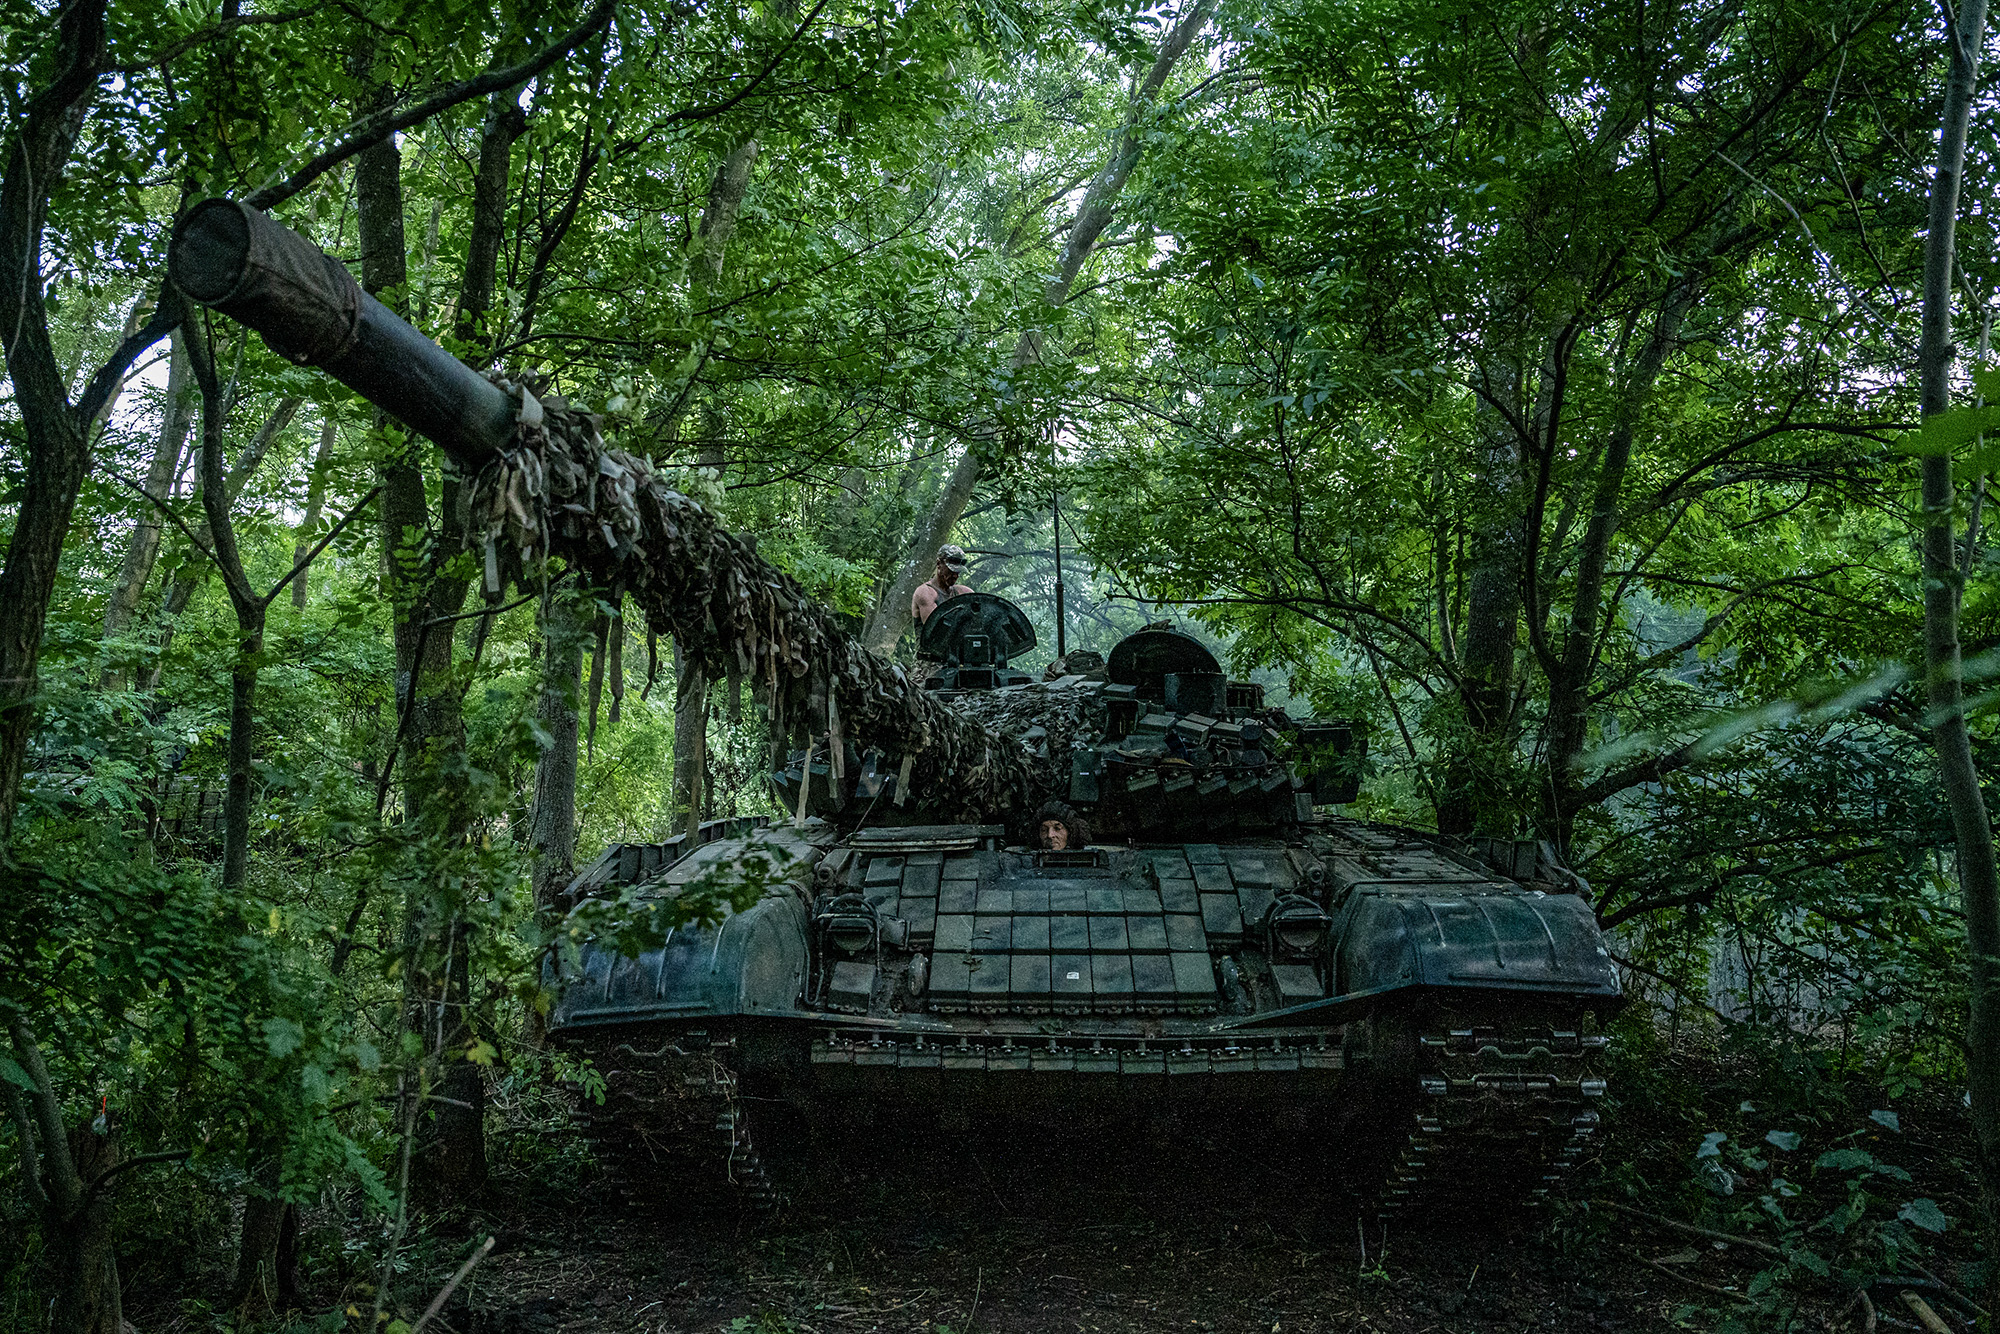 Ukrainian soldiers prepare their tank at the frontline in Donetsk Oblast, Ukraine, on August 8.